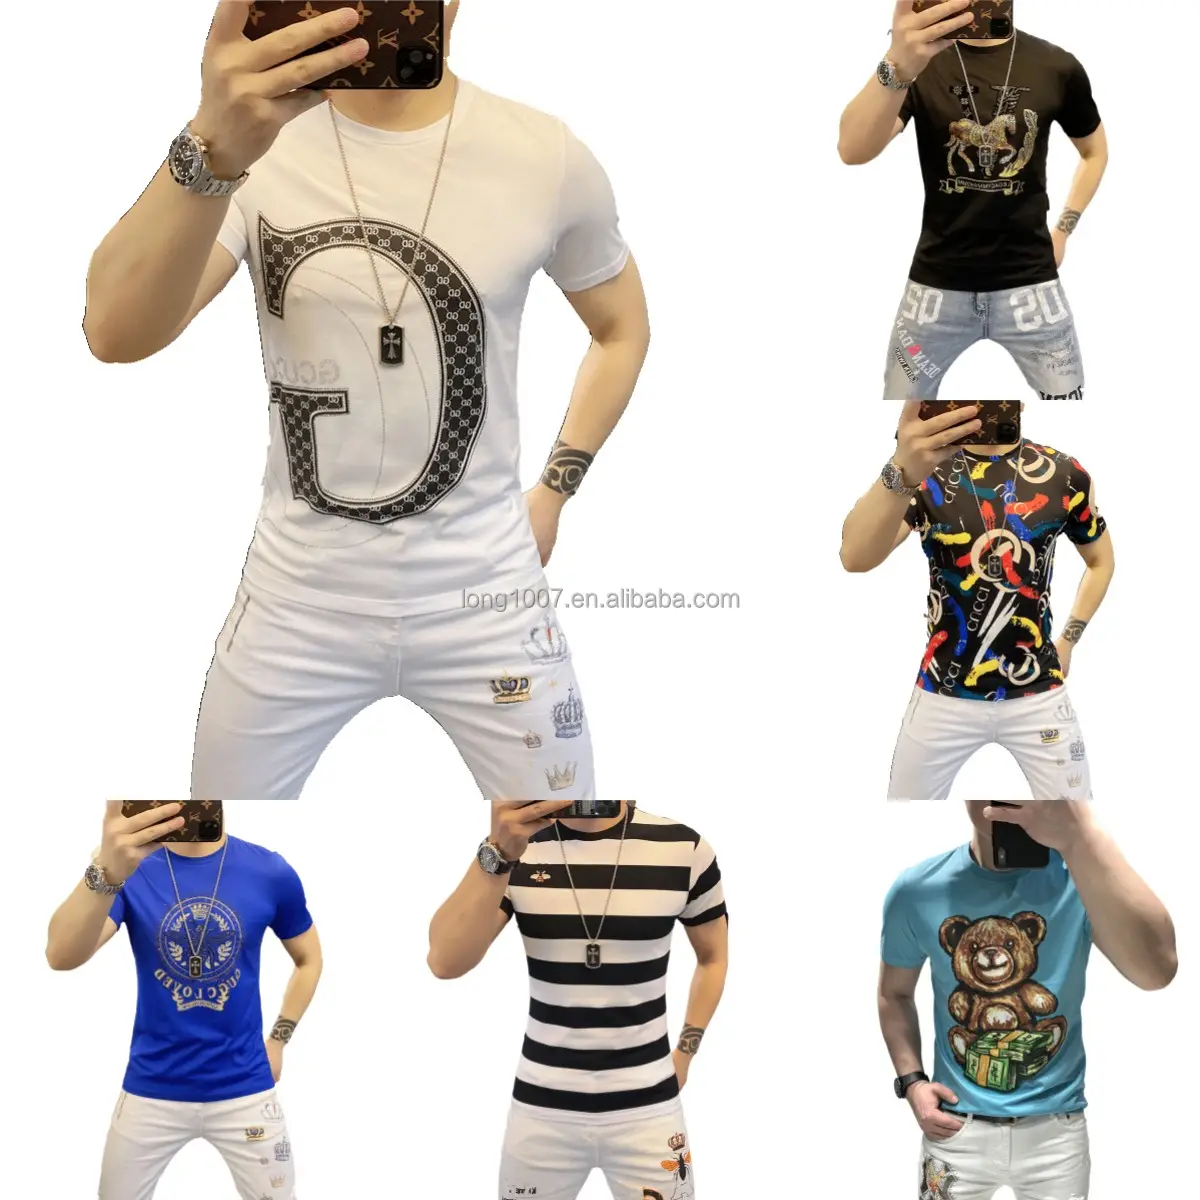 Men's T-shirt Casual 3D printed T-shirt short sleeved top Men's clothing